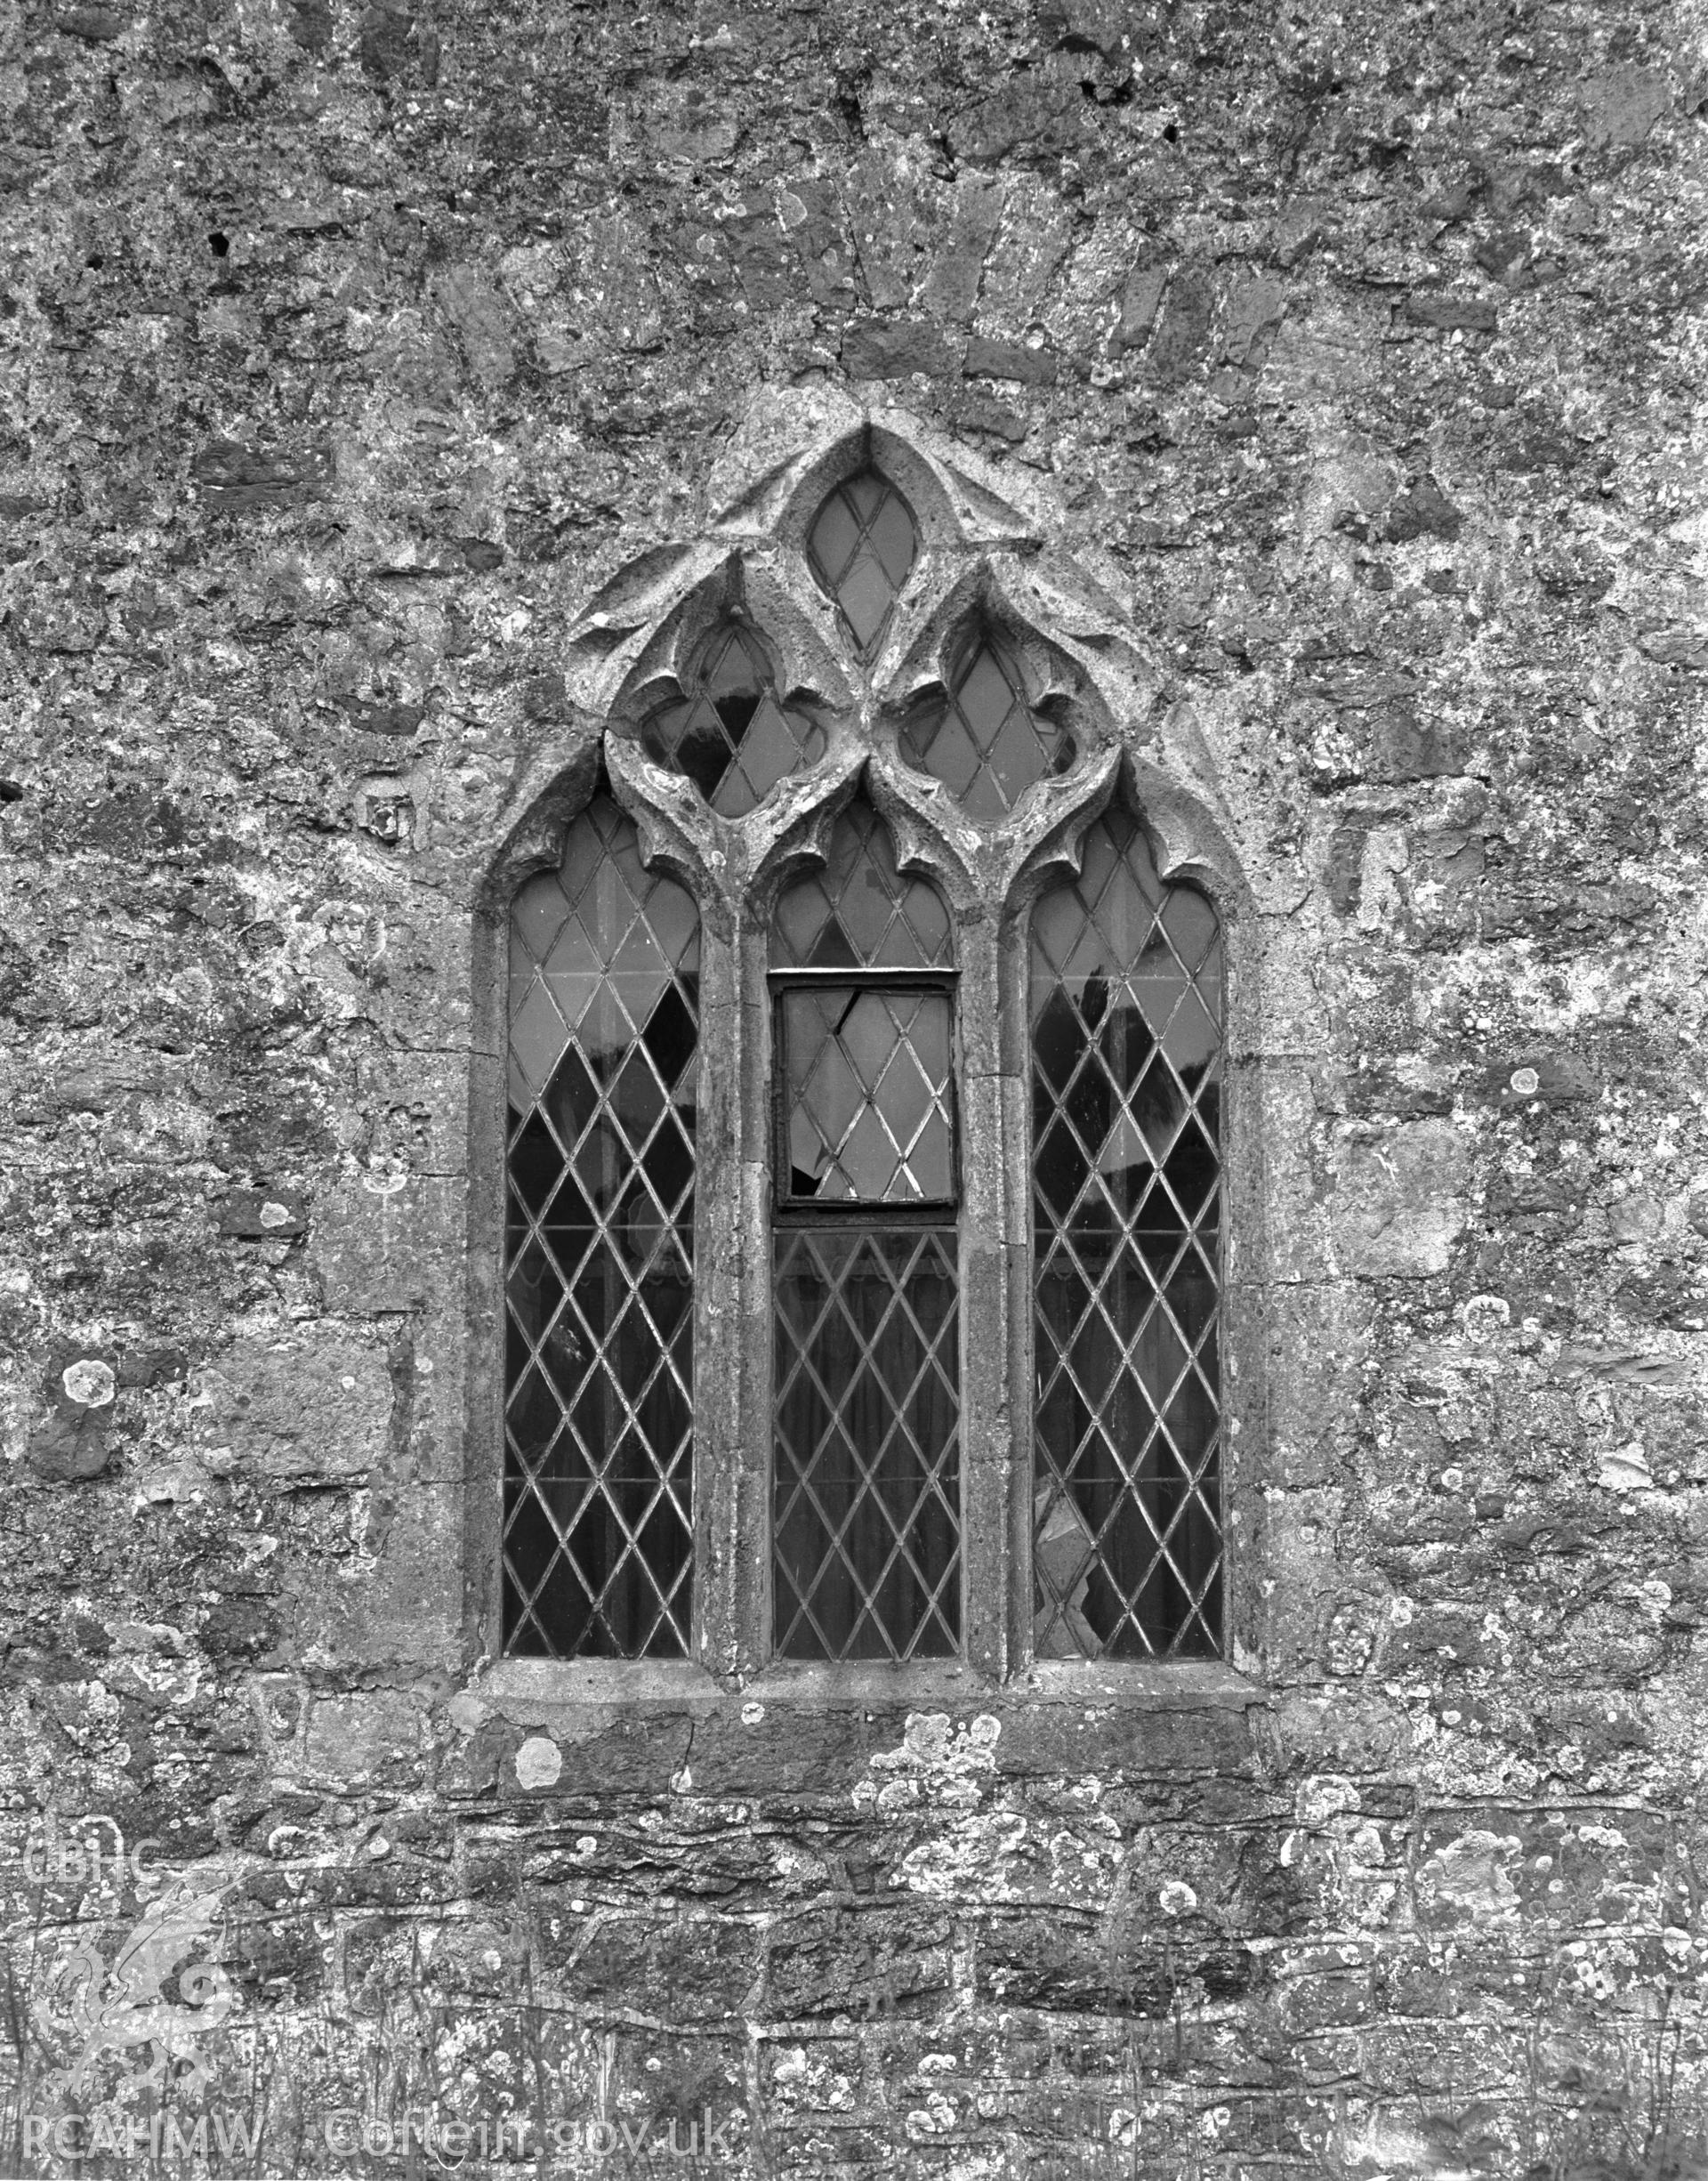 East window of the chancel.